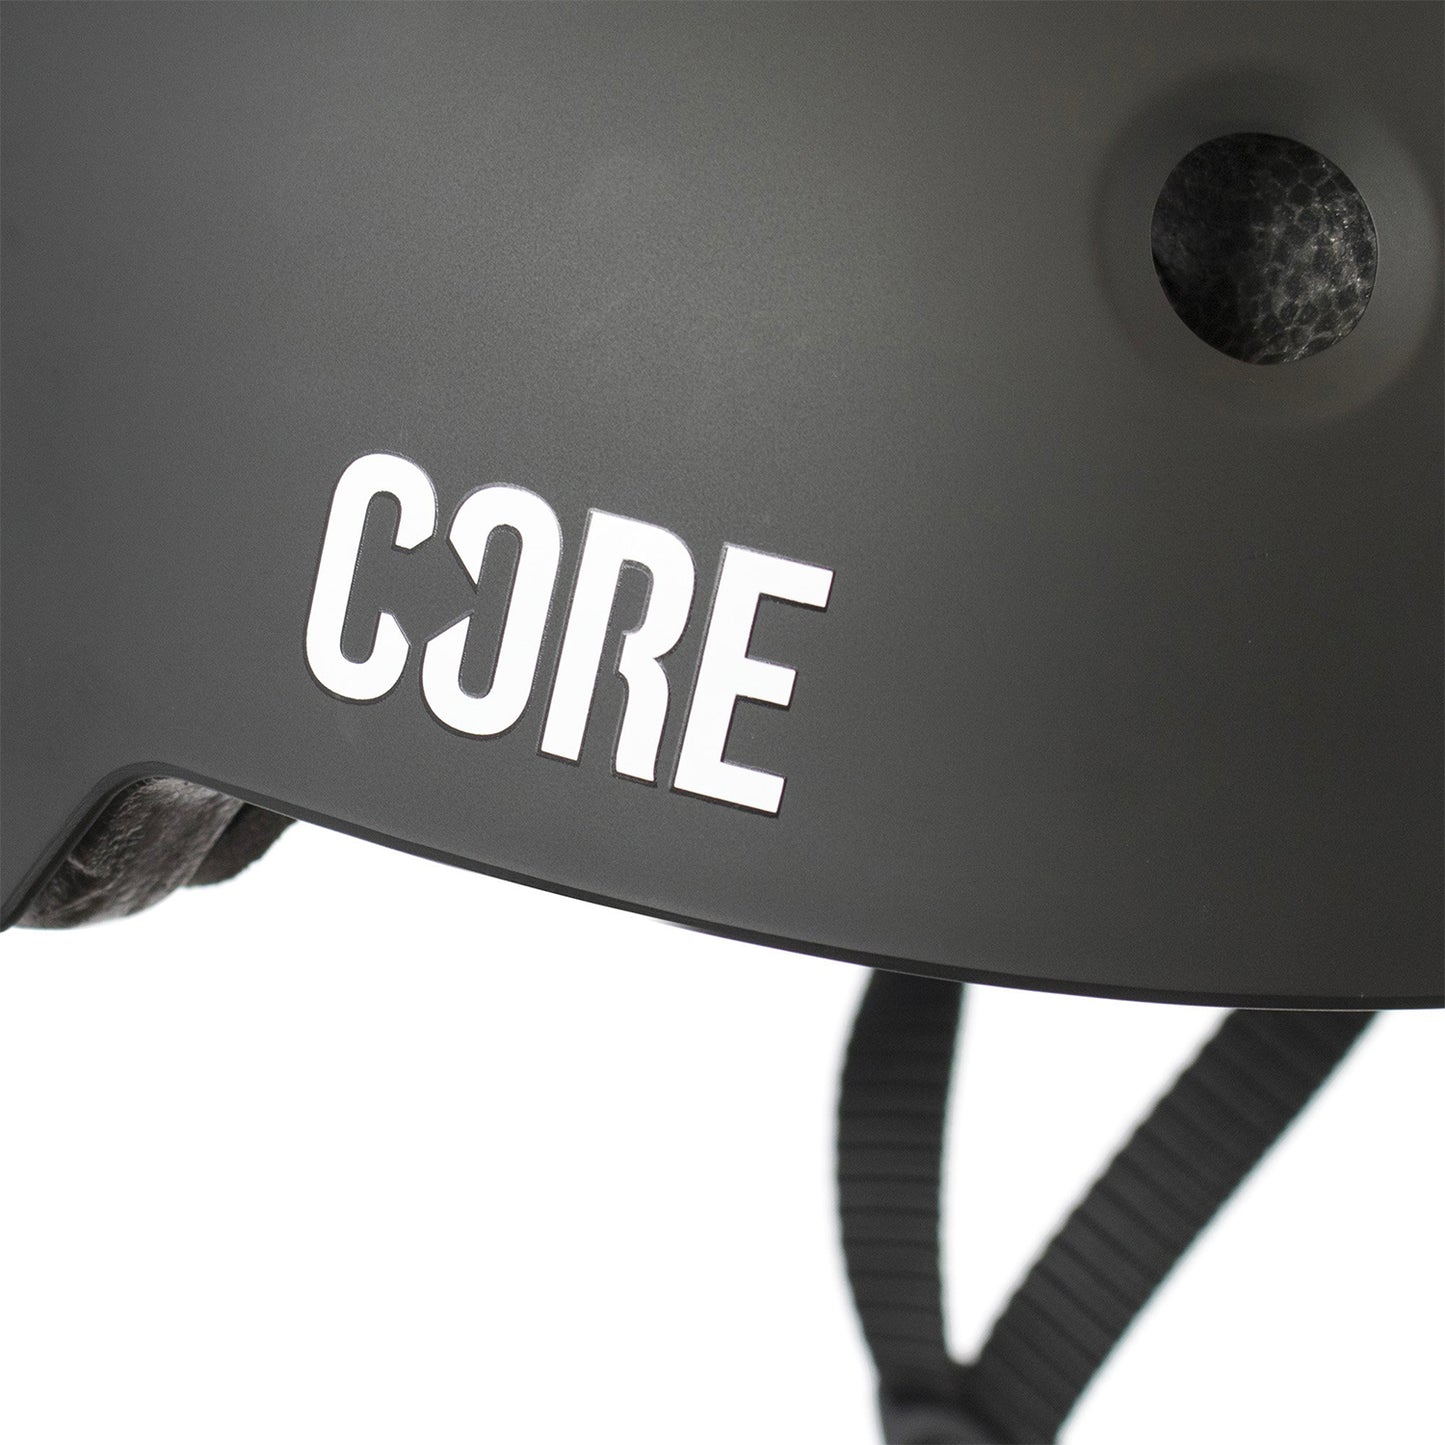 CORE Street Helmet - Black / White - Prime Delux Store